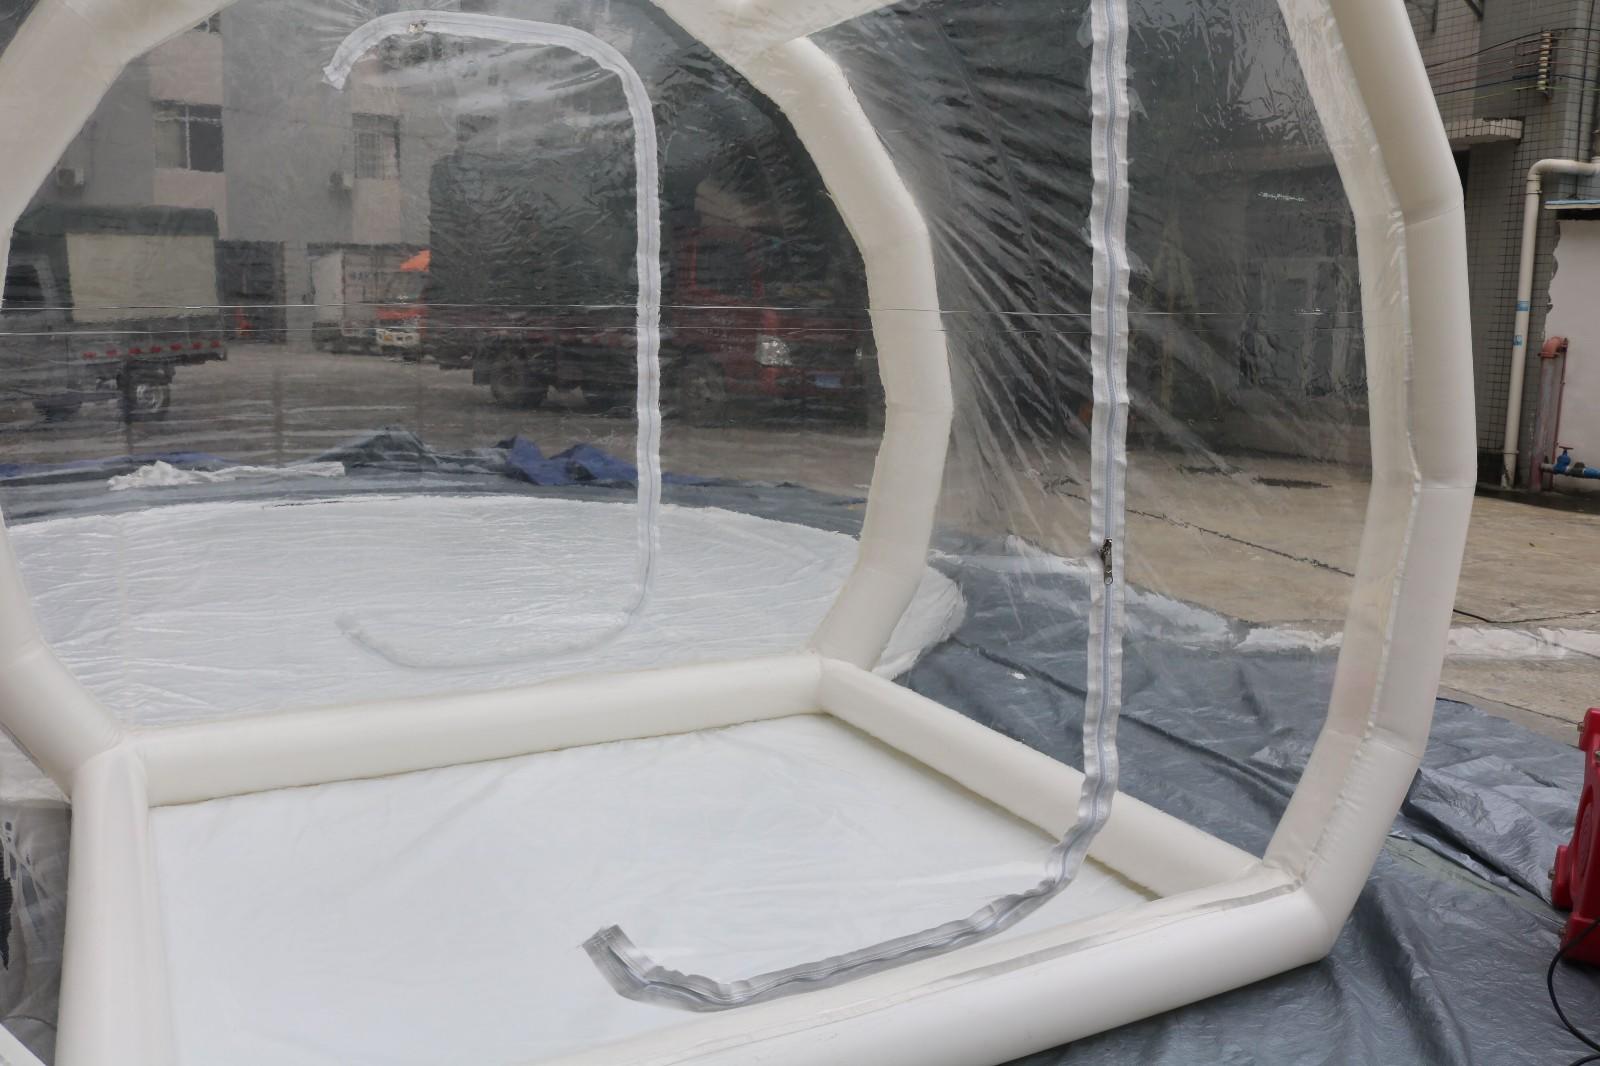 JOY inflatable bridge tent for backyard wholesale for kids